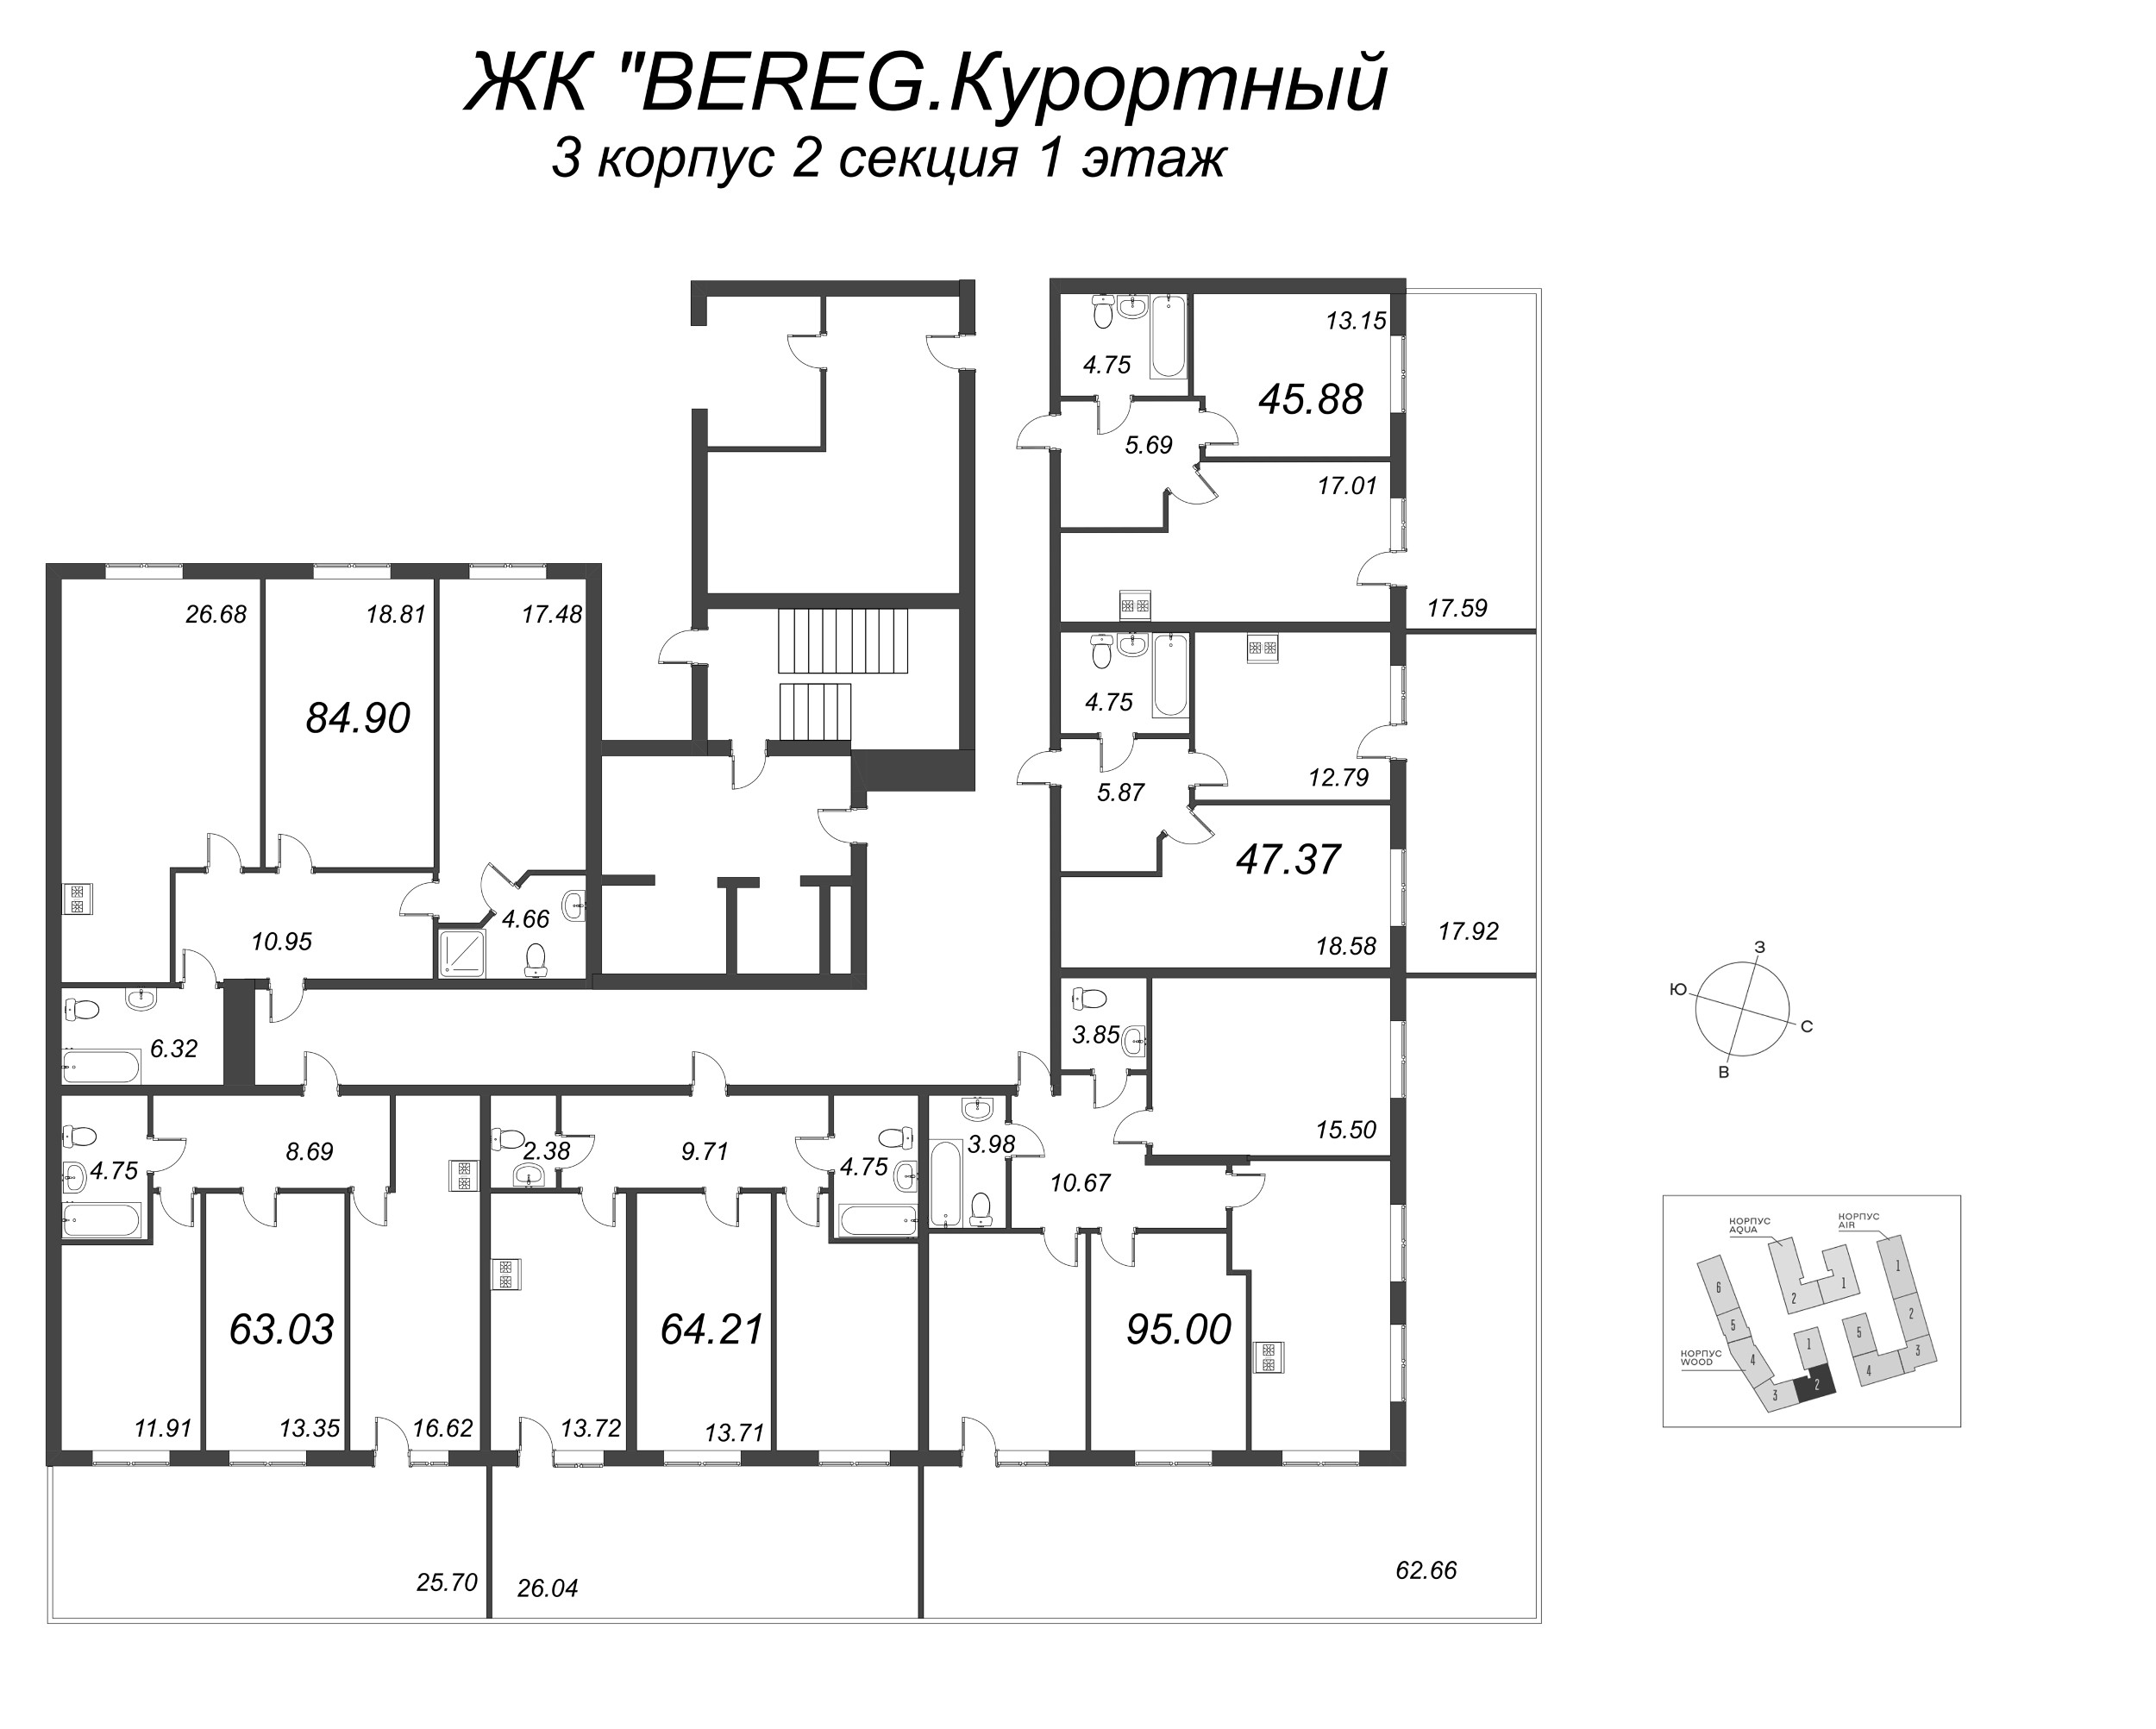 3-комнатная (Евро) квартира, 84.9 м² - планировка этажа